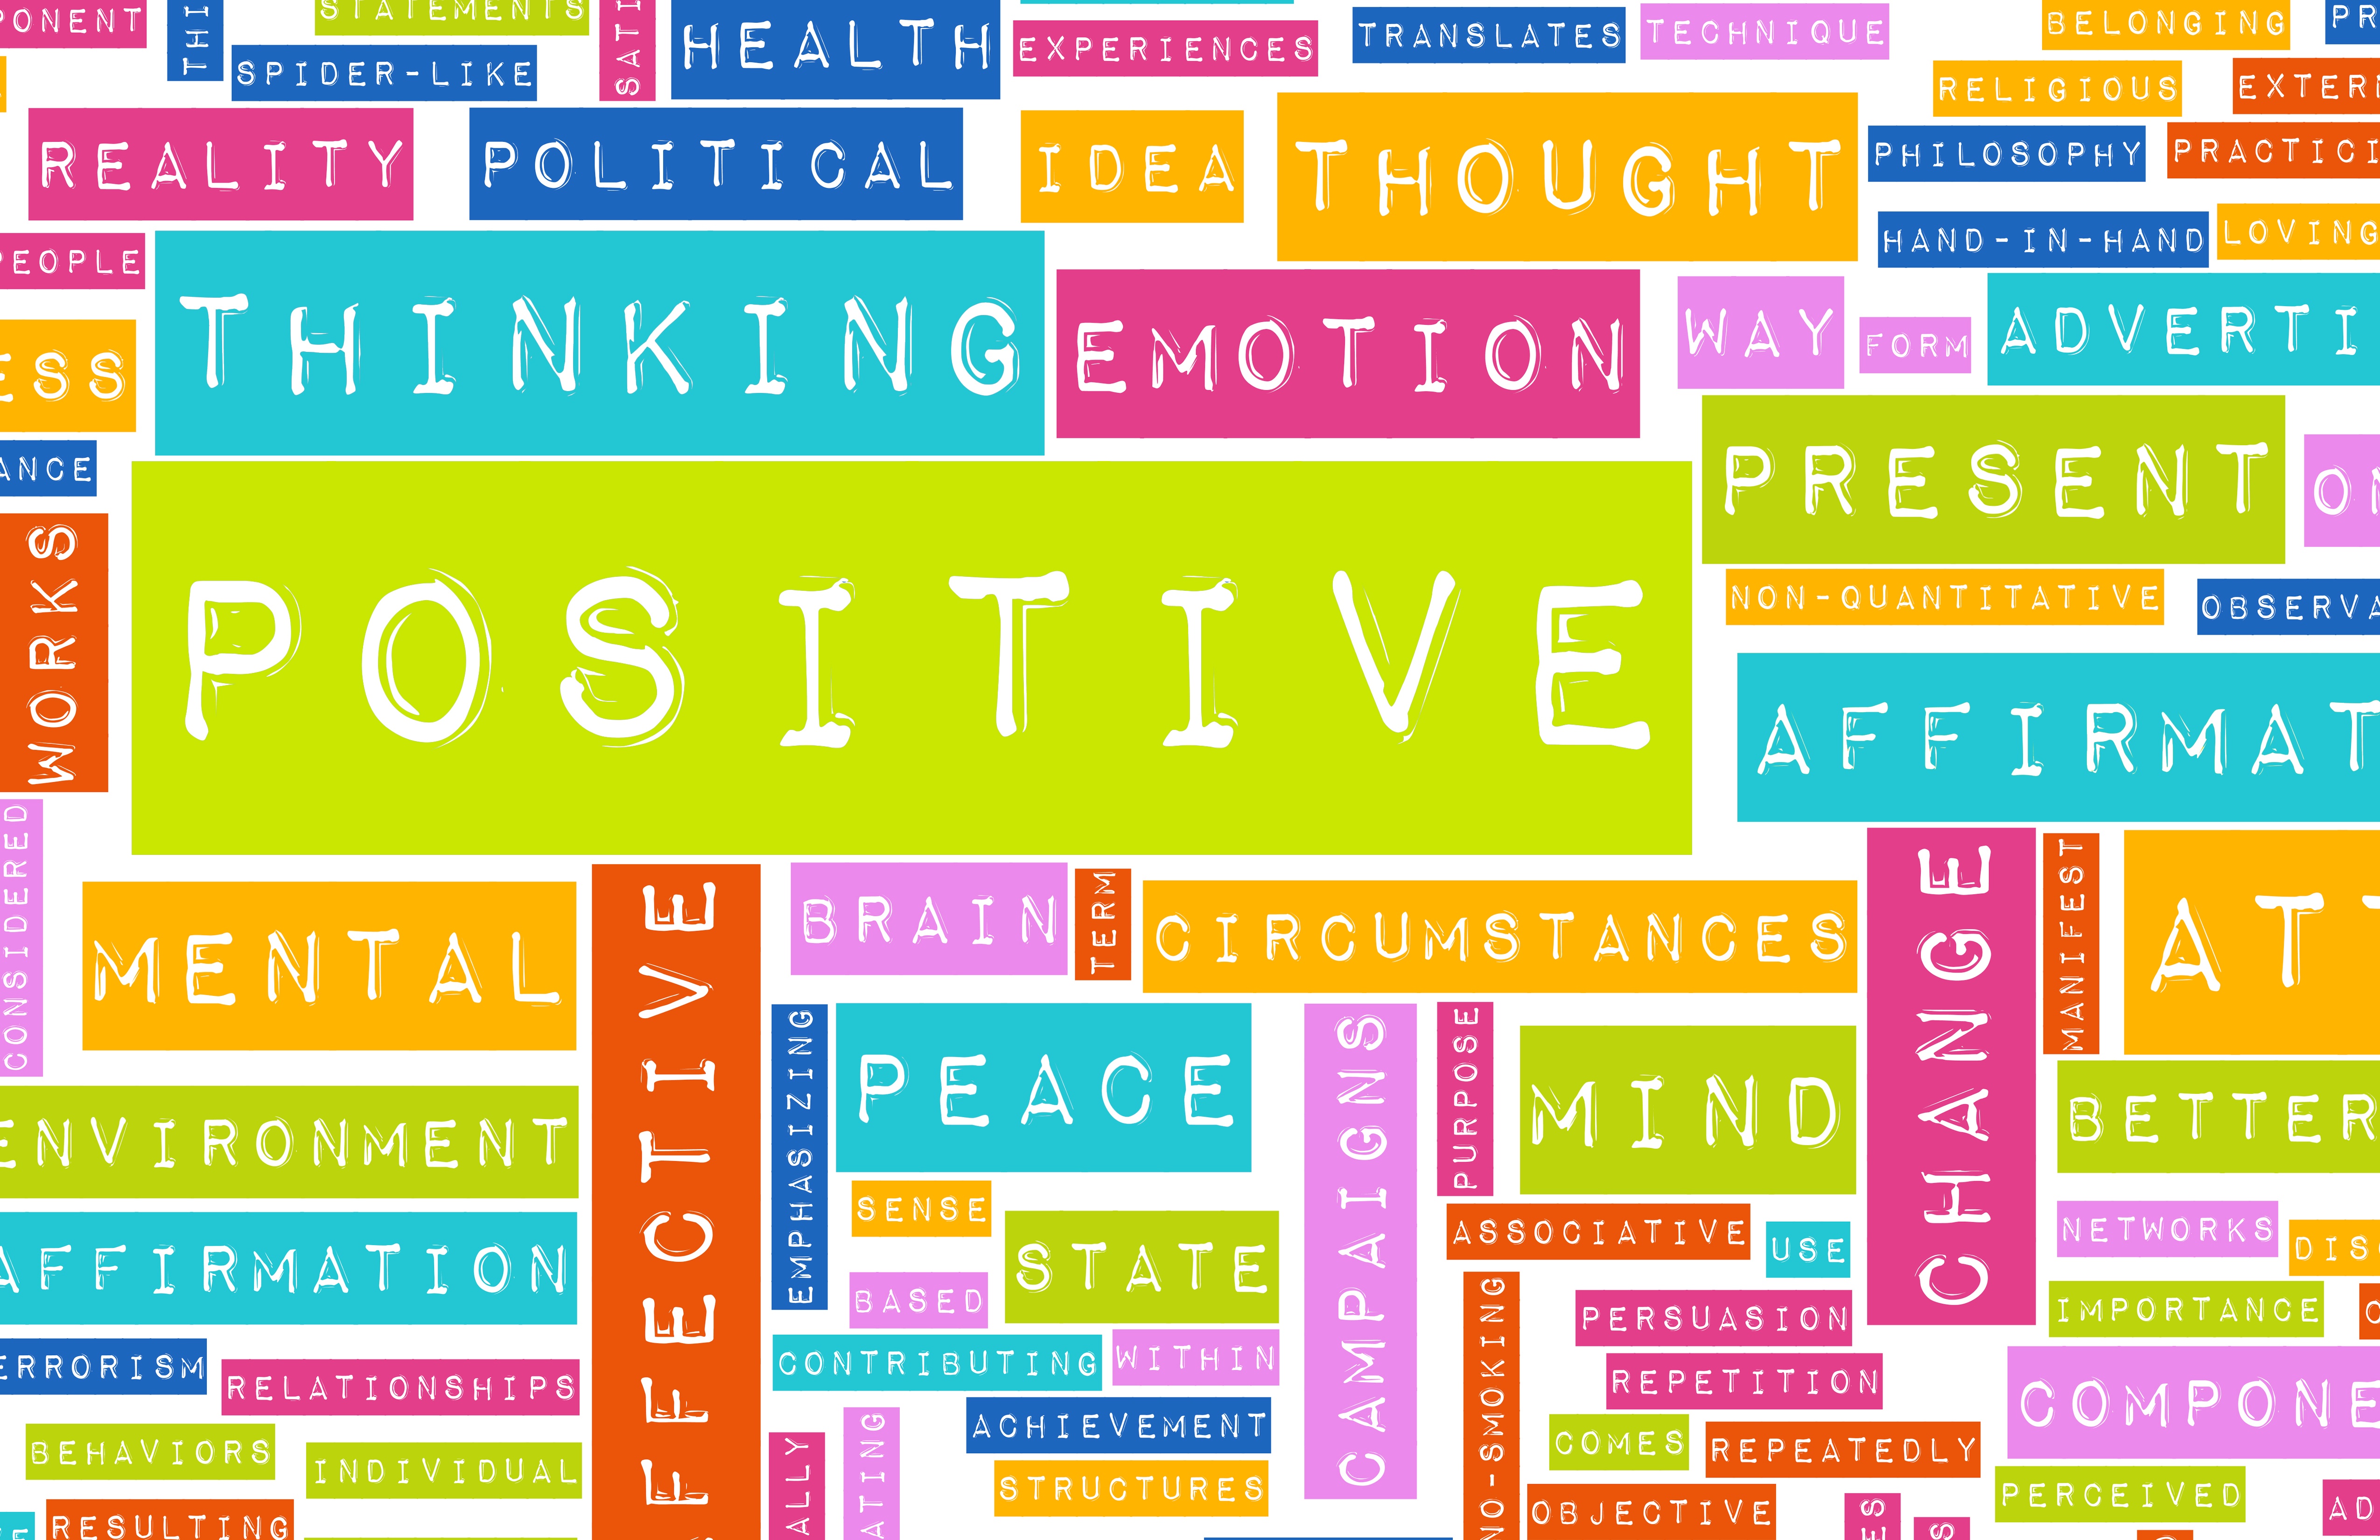 Positive thinking